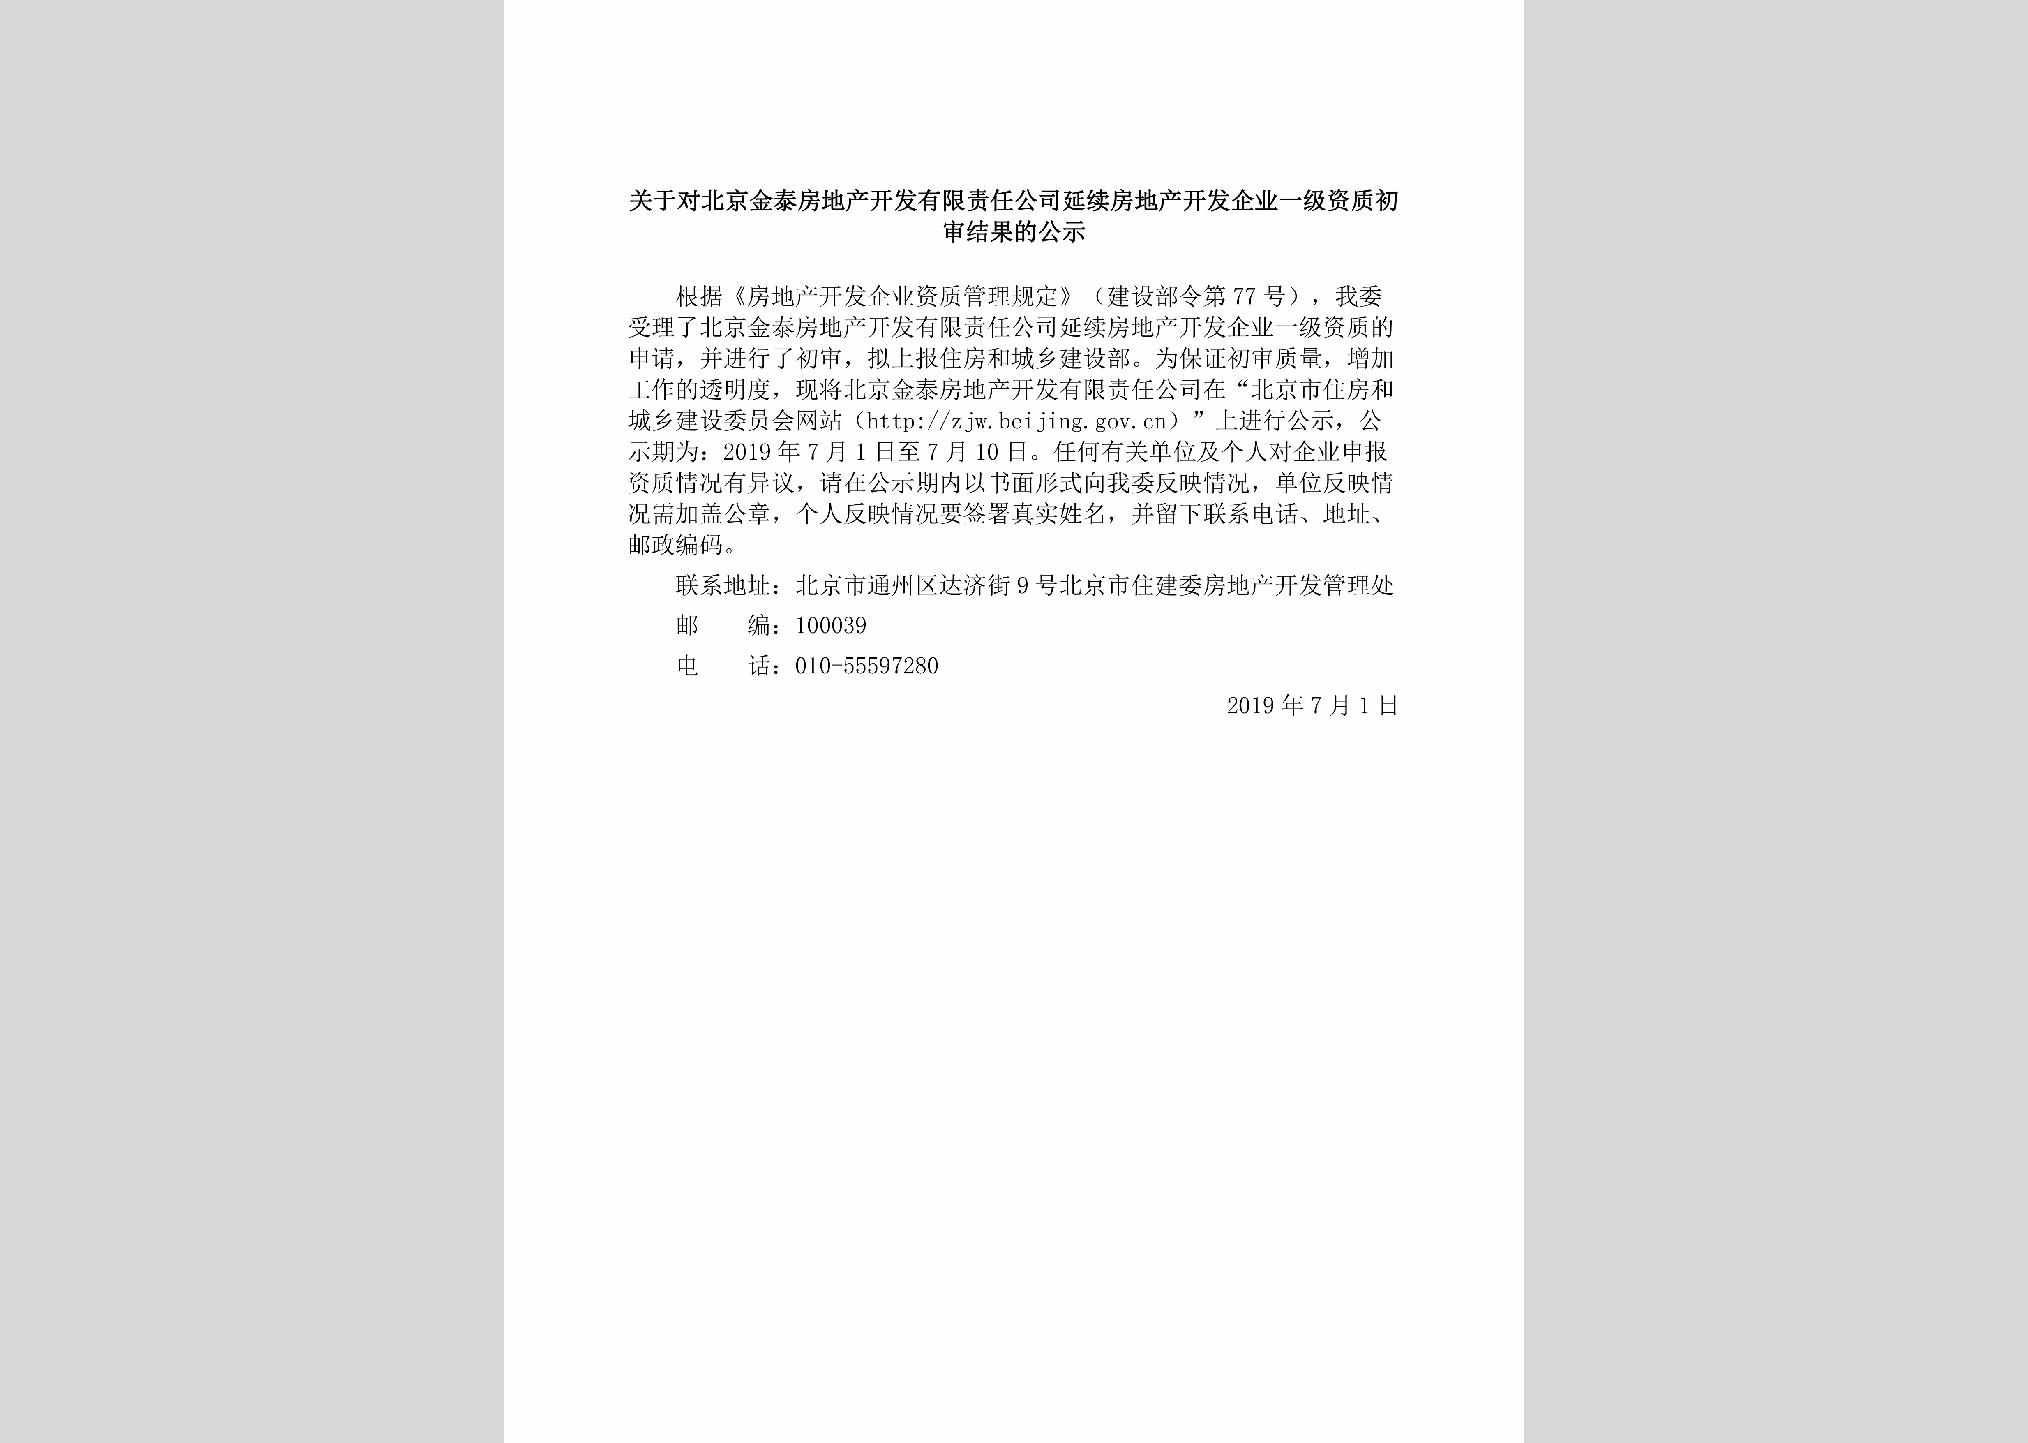 BJ-BJJTFDCK-2019：关于对北京金泰房地产开发有限责任公司延续房地产开发企业一级资质初审结果的公示